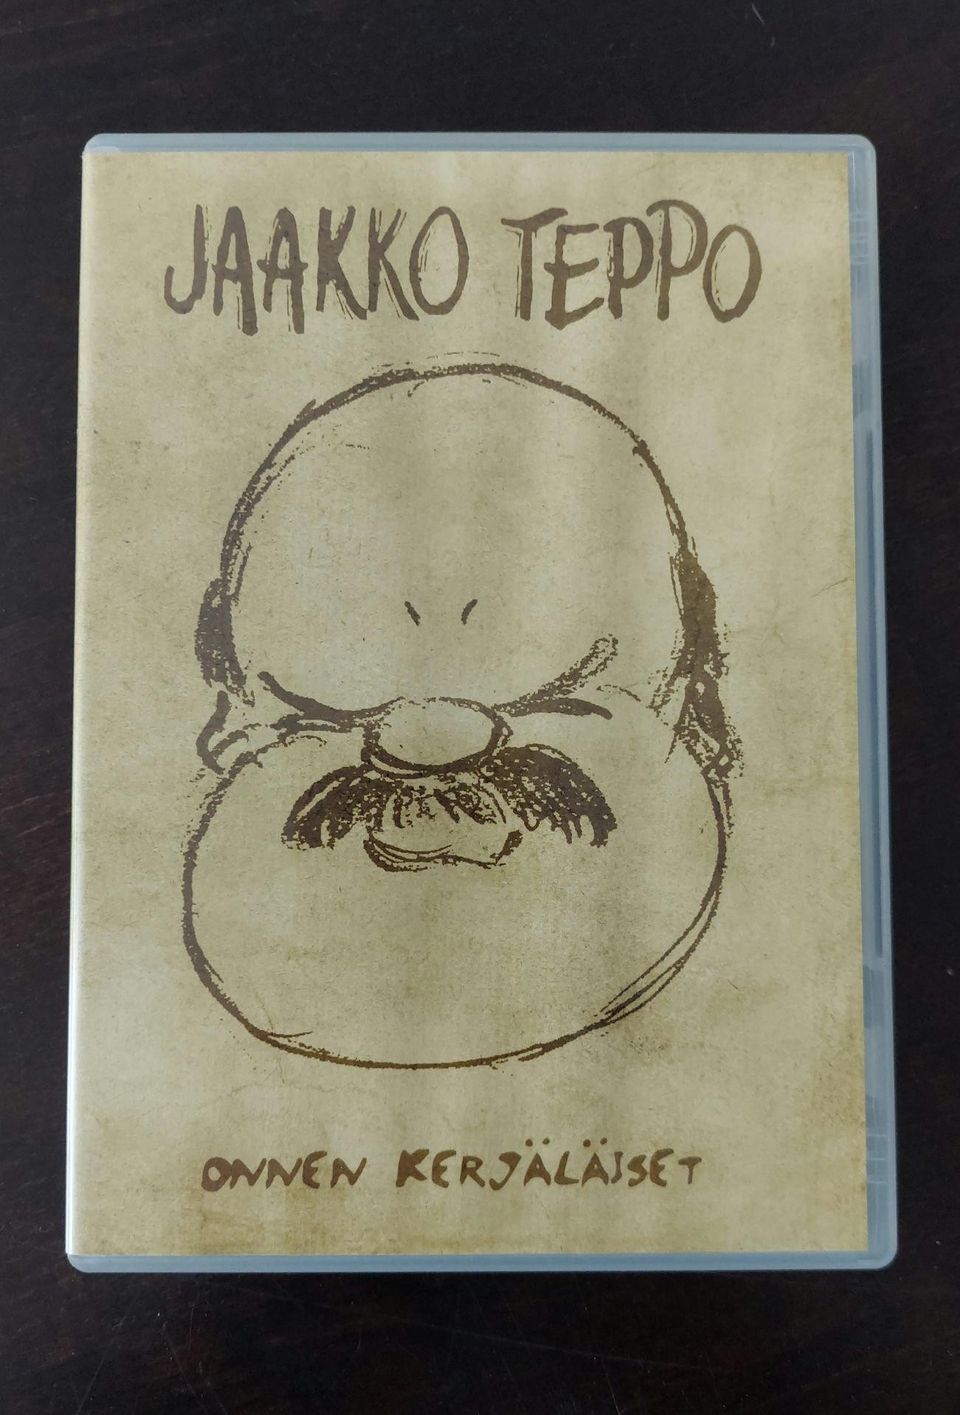 Jaakko Teppo Live DVD